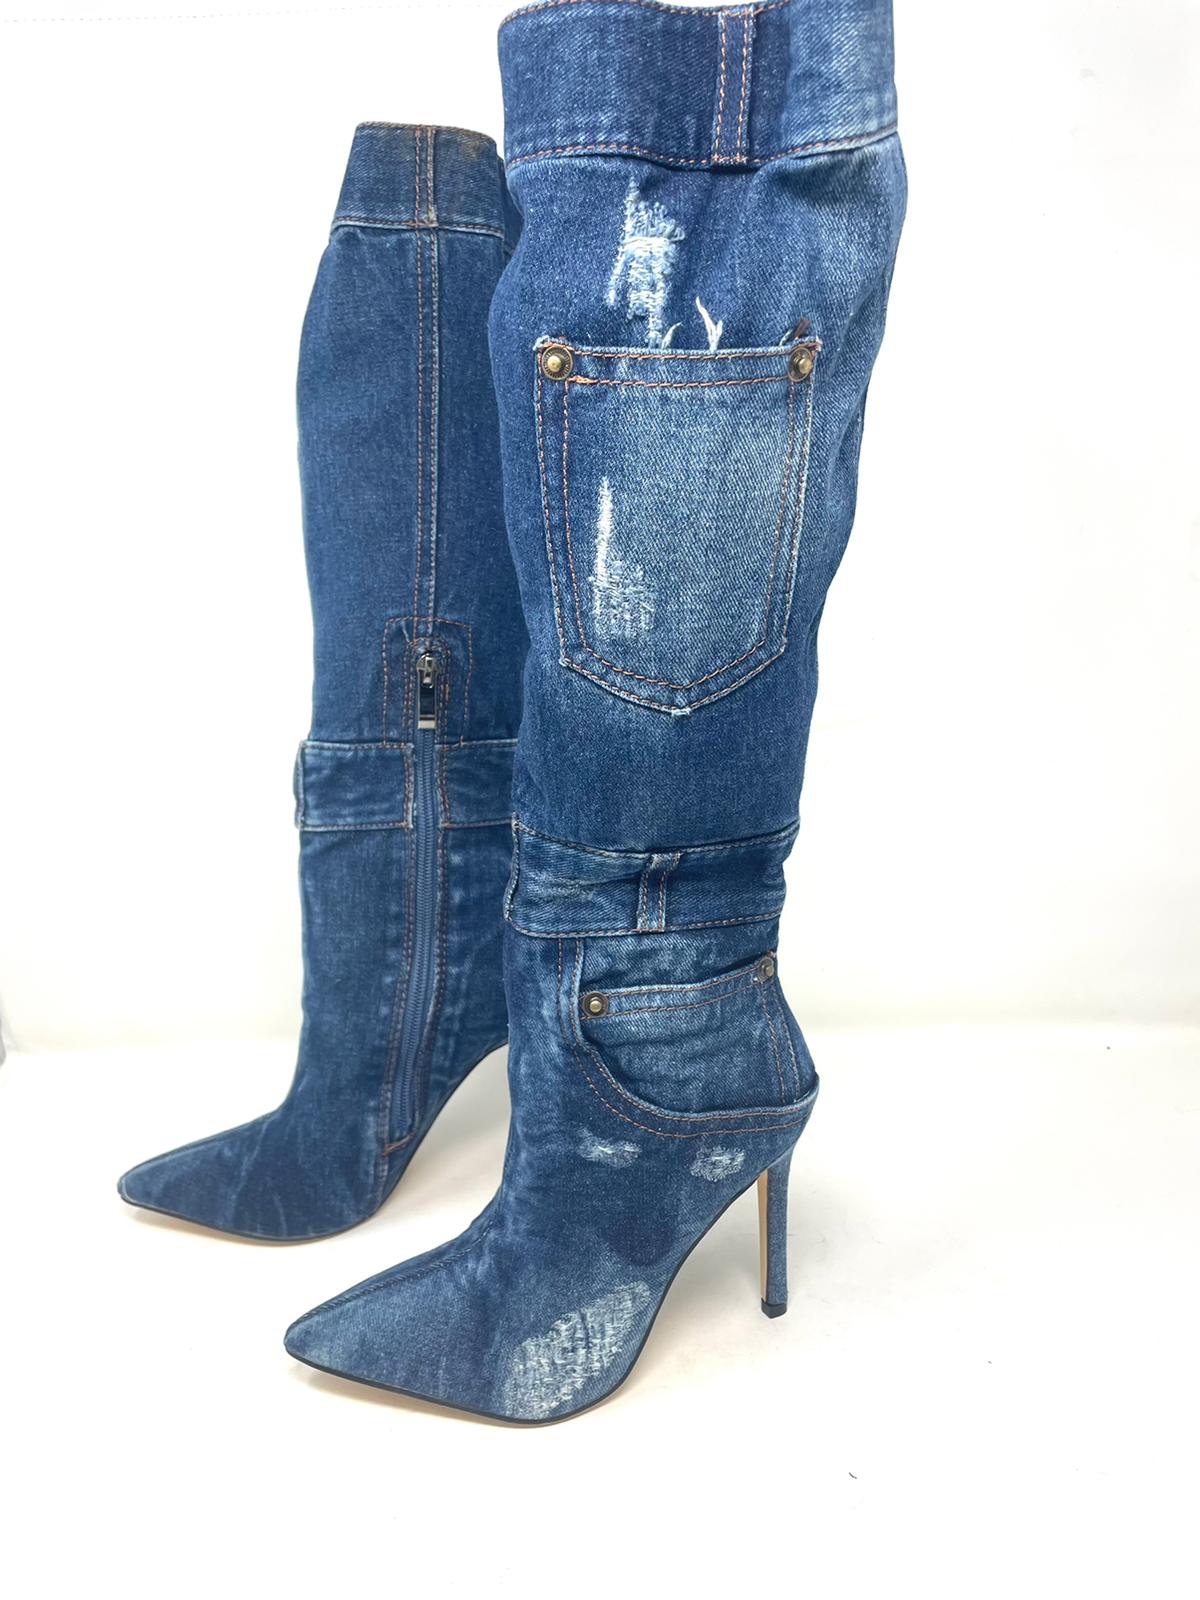 Faded denim boot with 10 cm heel